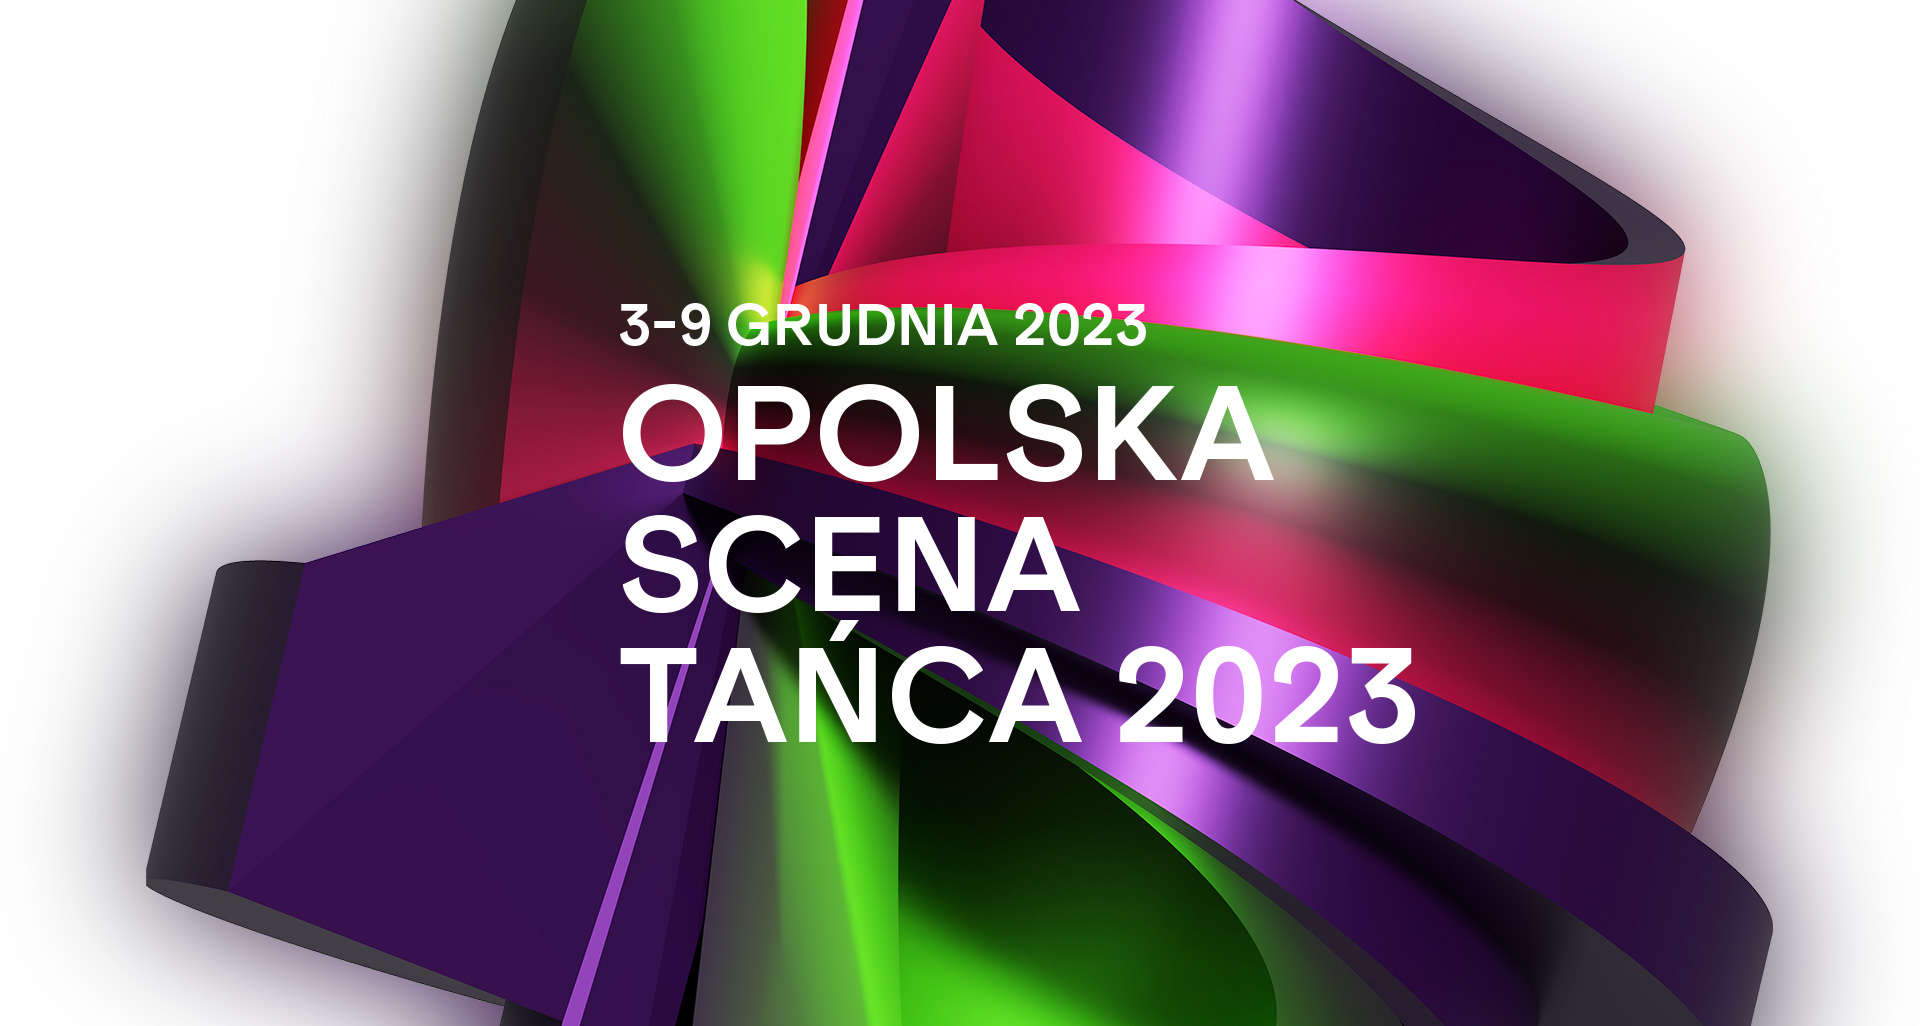 OPOLSKA SCENA TAŃCA 2023 już w grudniu